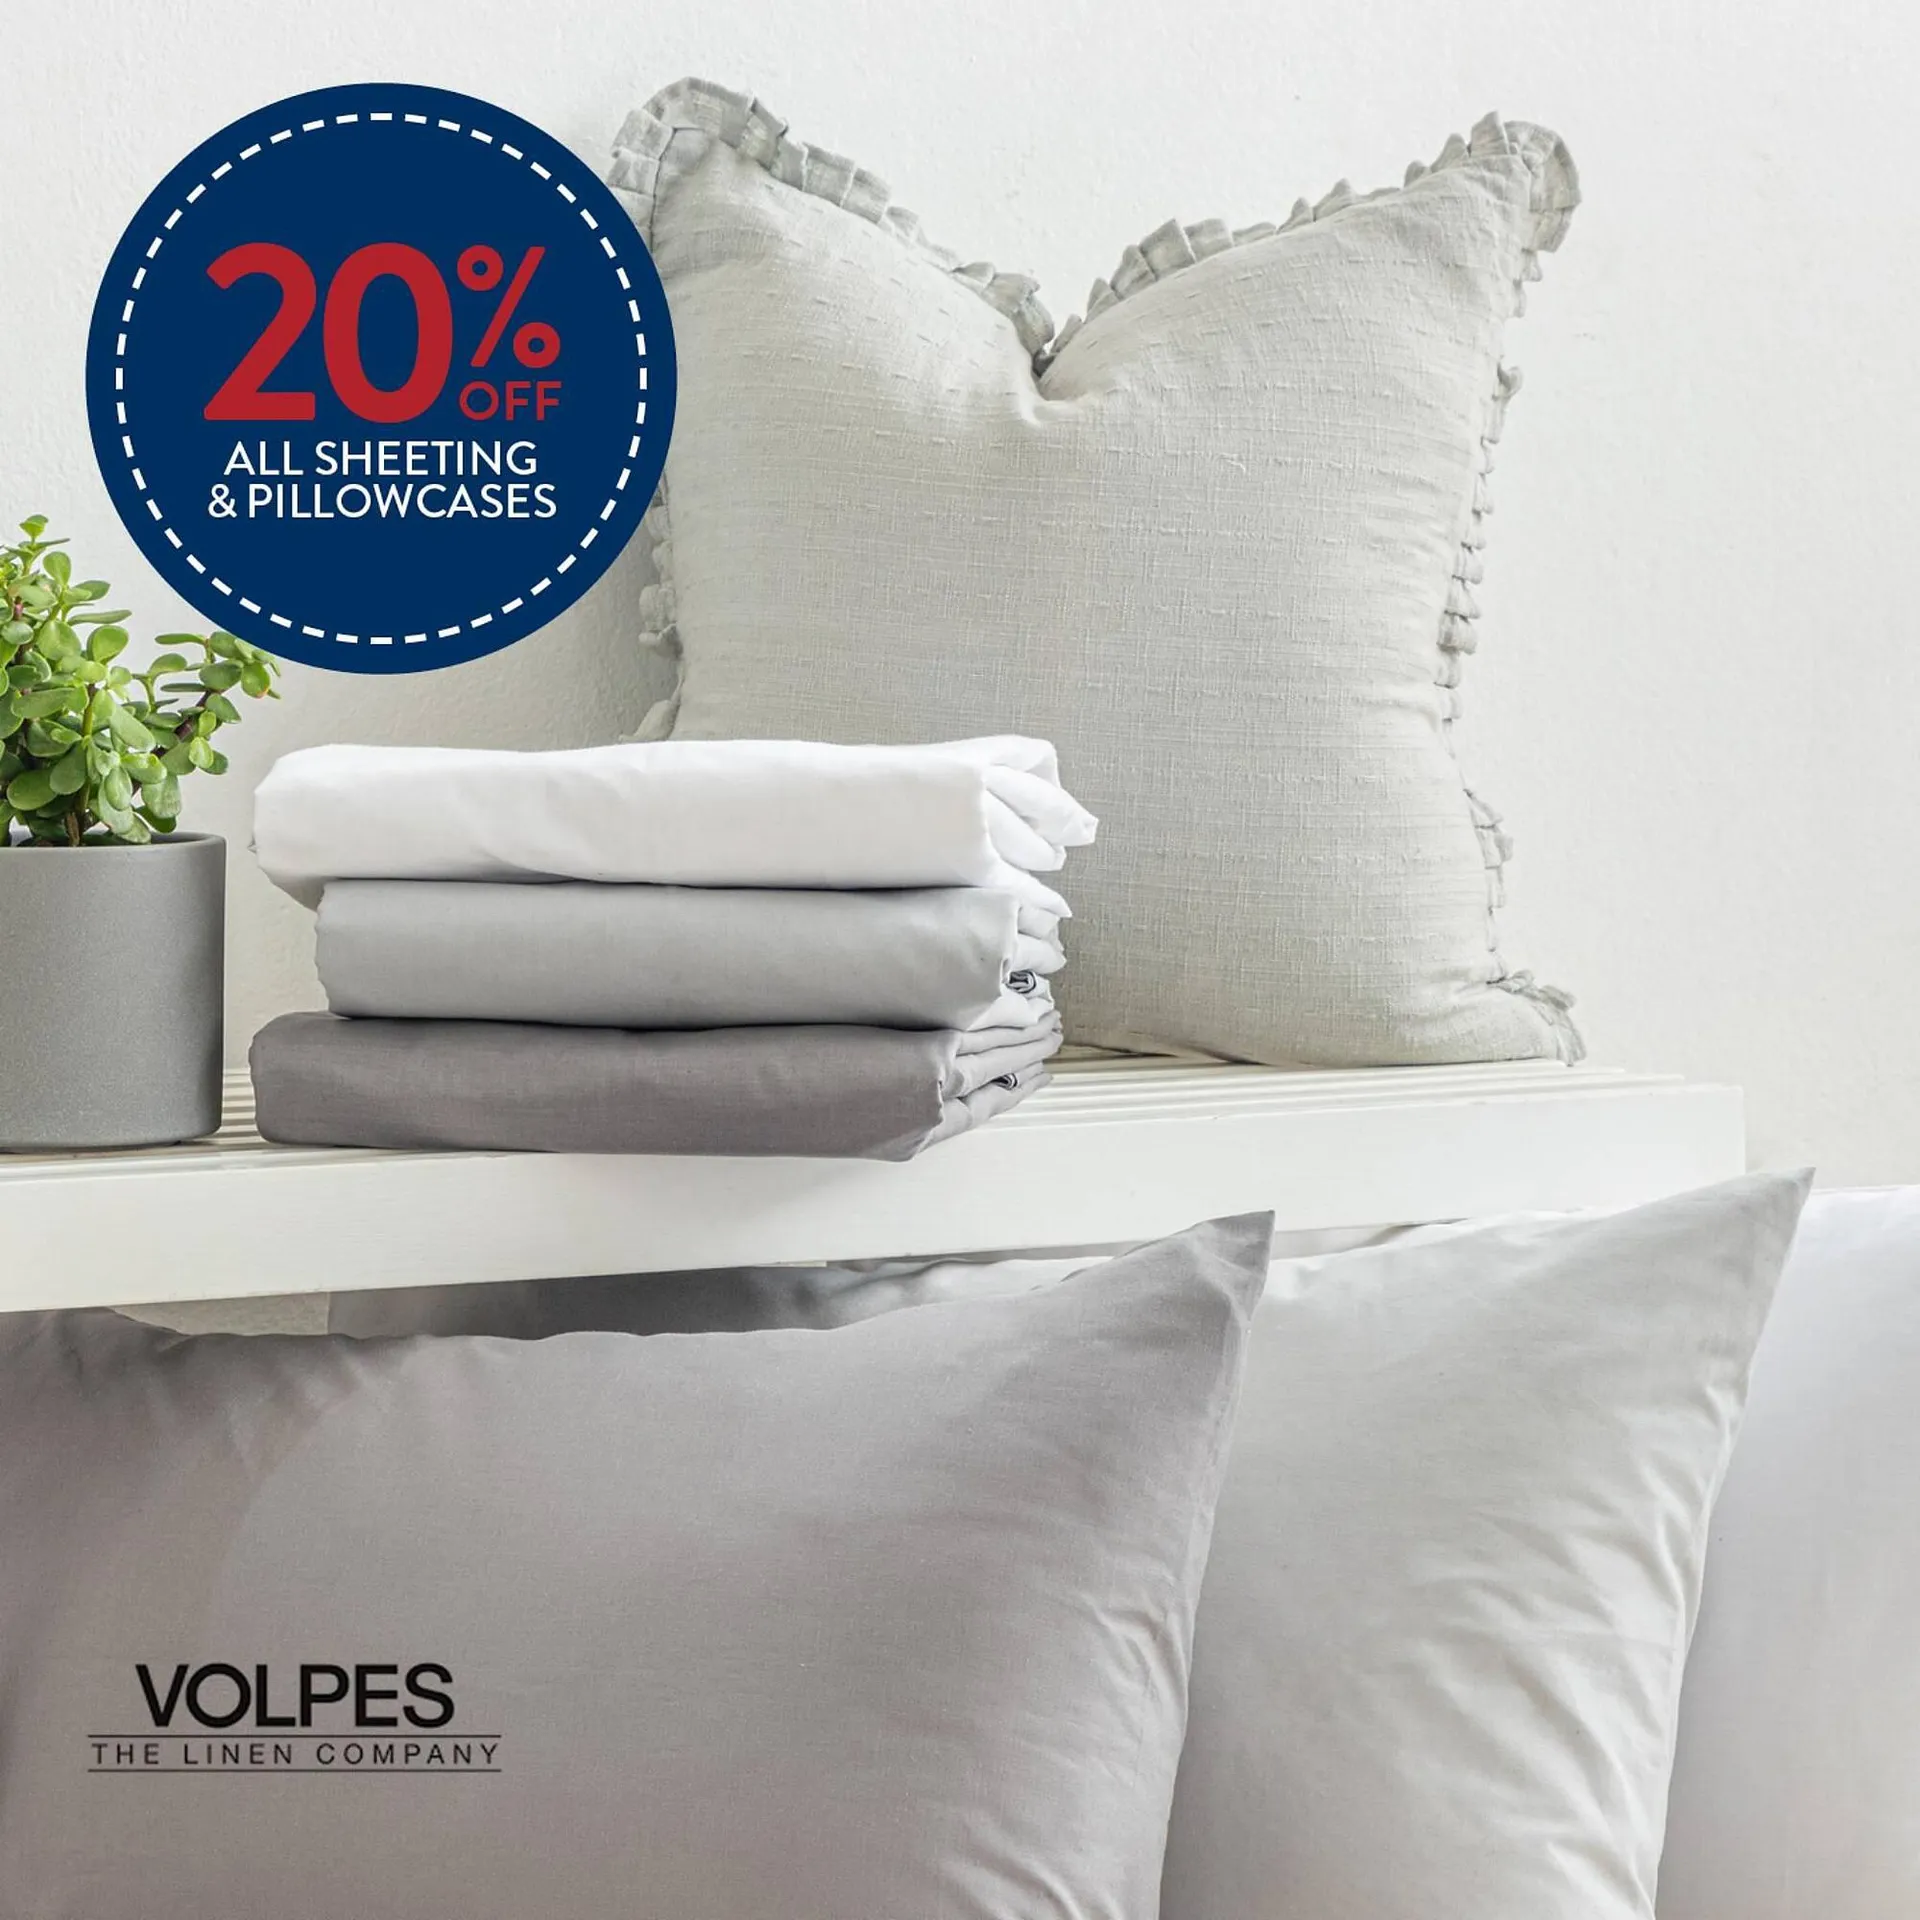 Volpes catalogue - 1